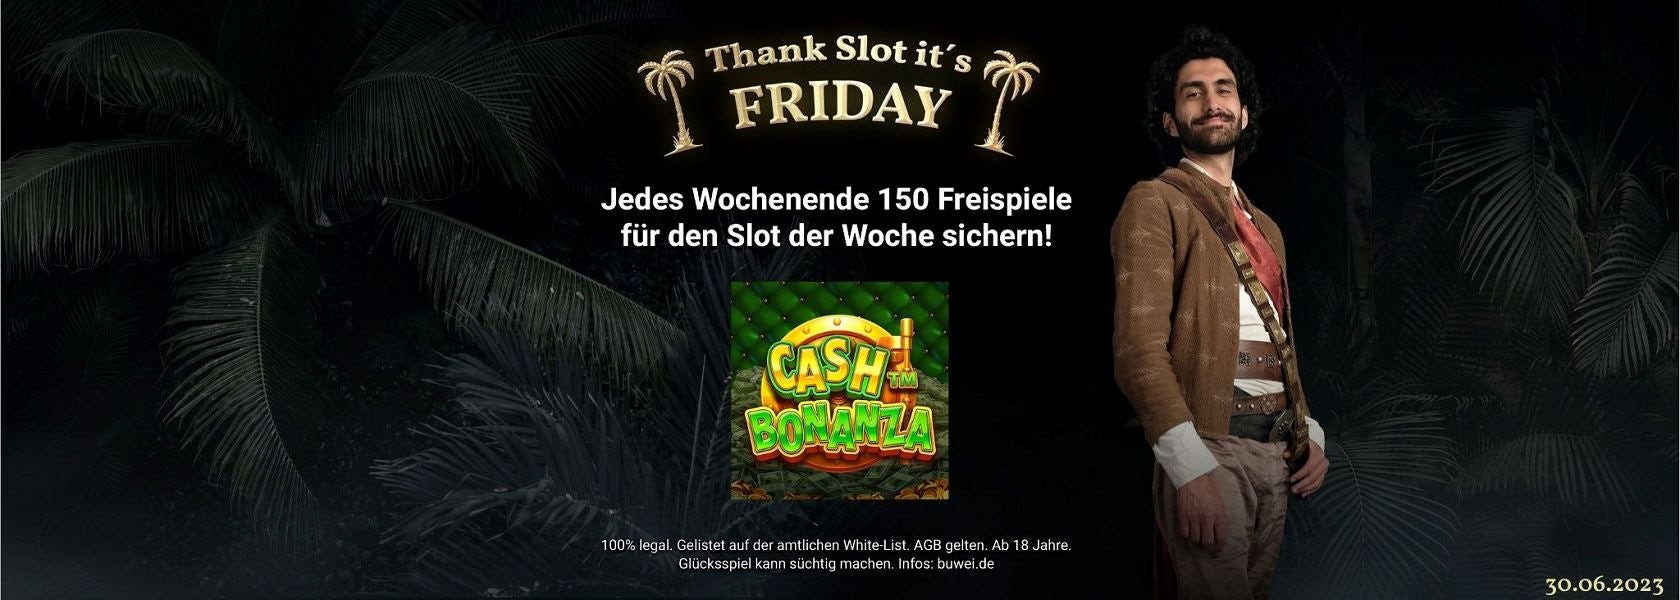 JackpotPiraten-Thank-Slot-Its-Friday-30062023